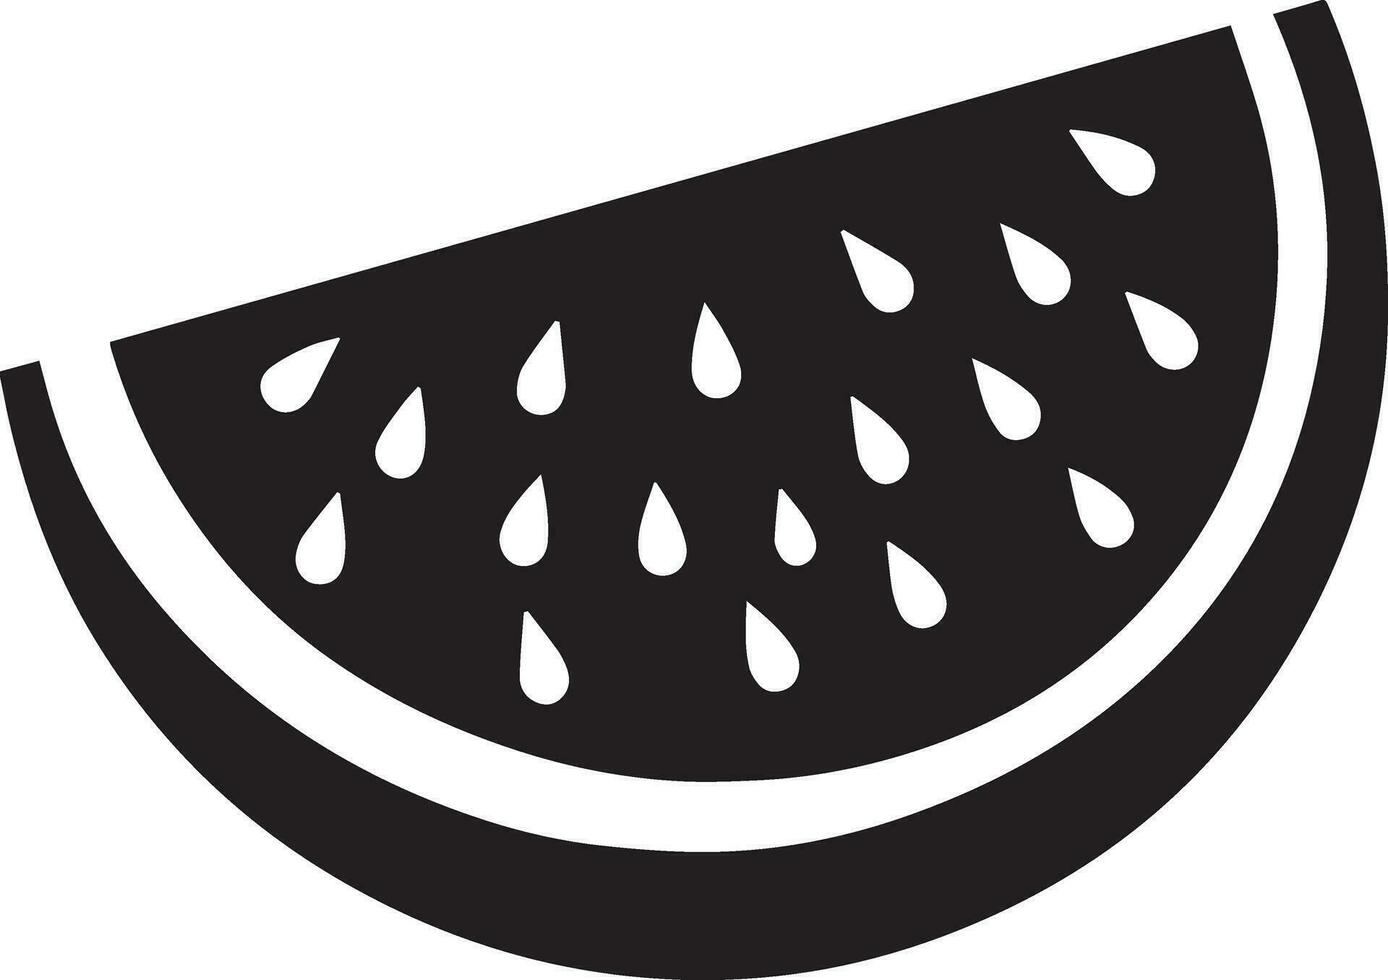 Watermelon vector silhouette, Watermelon Fruit vector, flat illustration